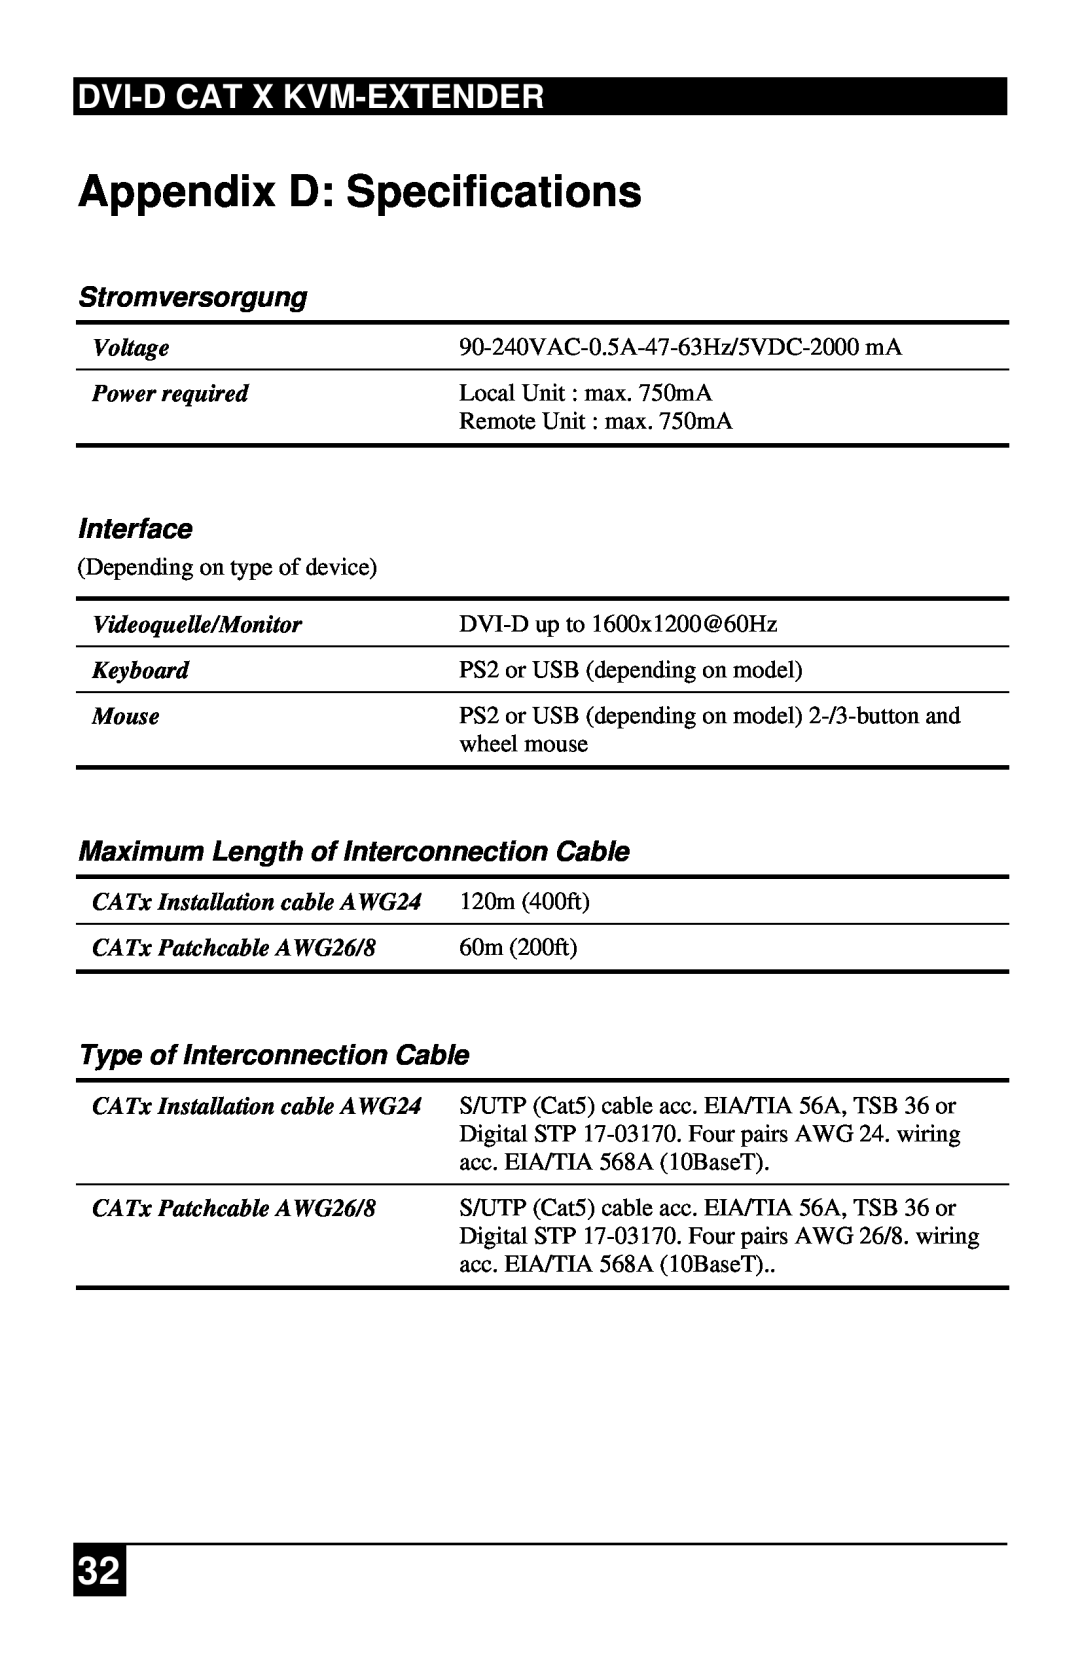 Black Box ACS1009A, ACS4201A manual Appendix D: Specifications, Dvi-Dcat X Kvm-Extender, Stromversorgung, Interface 